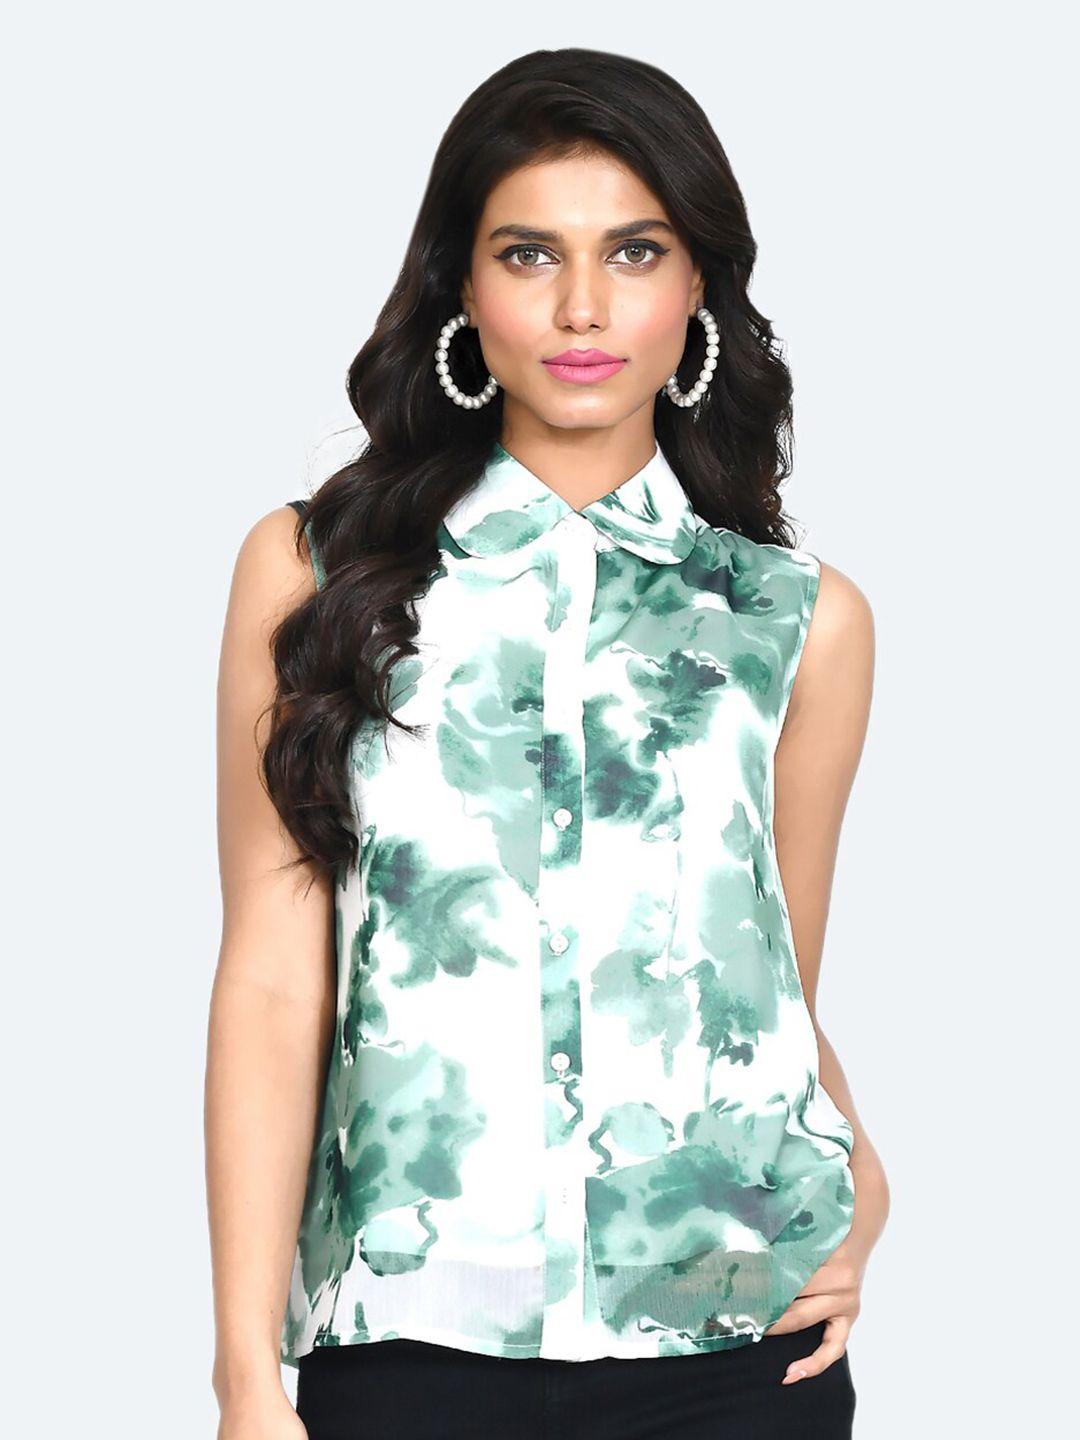 zink london white & green abstract printed peter pan collar sleeveless shirt style top